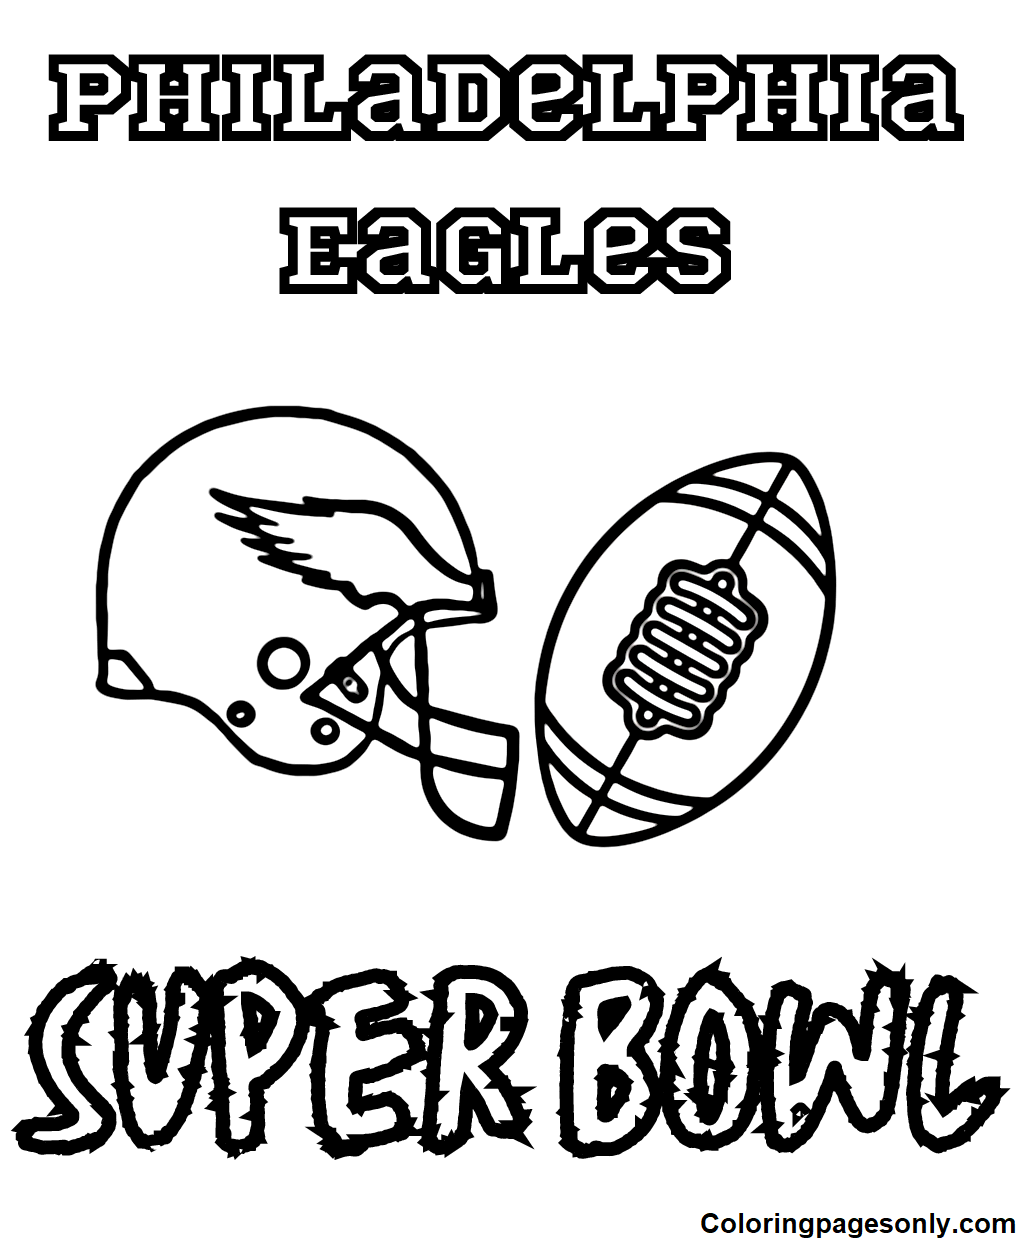 Philadelphia Eagles Super Bowl Image Coloring Pages